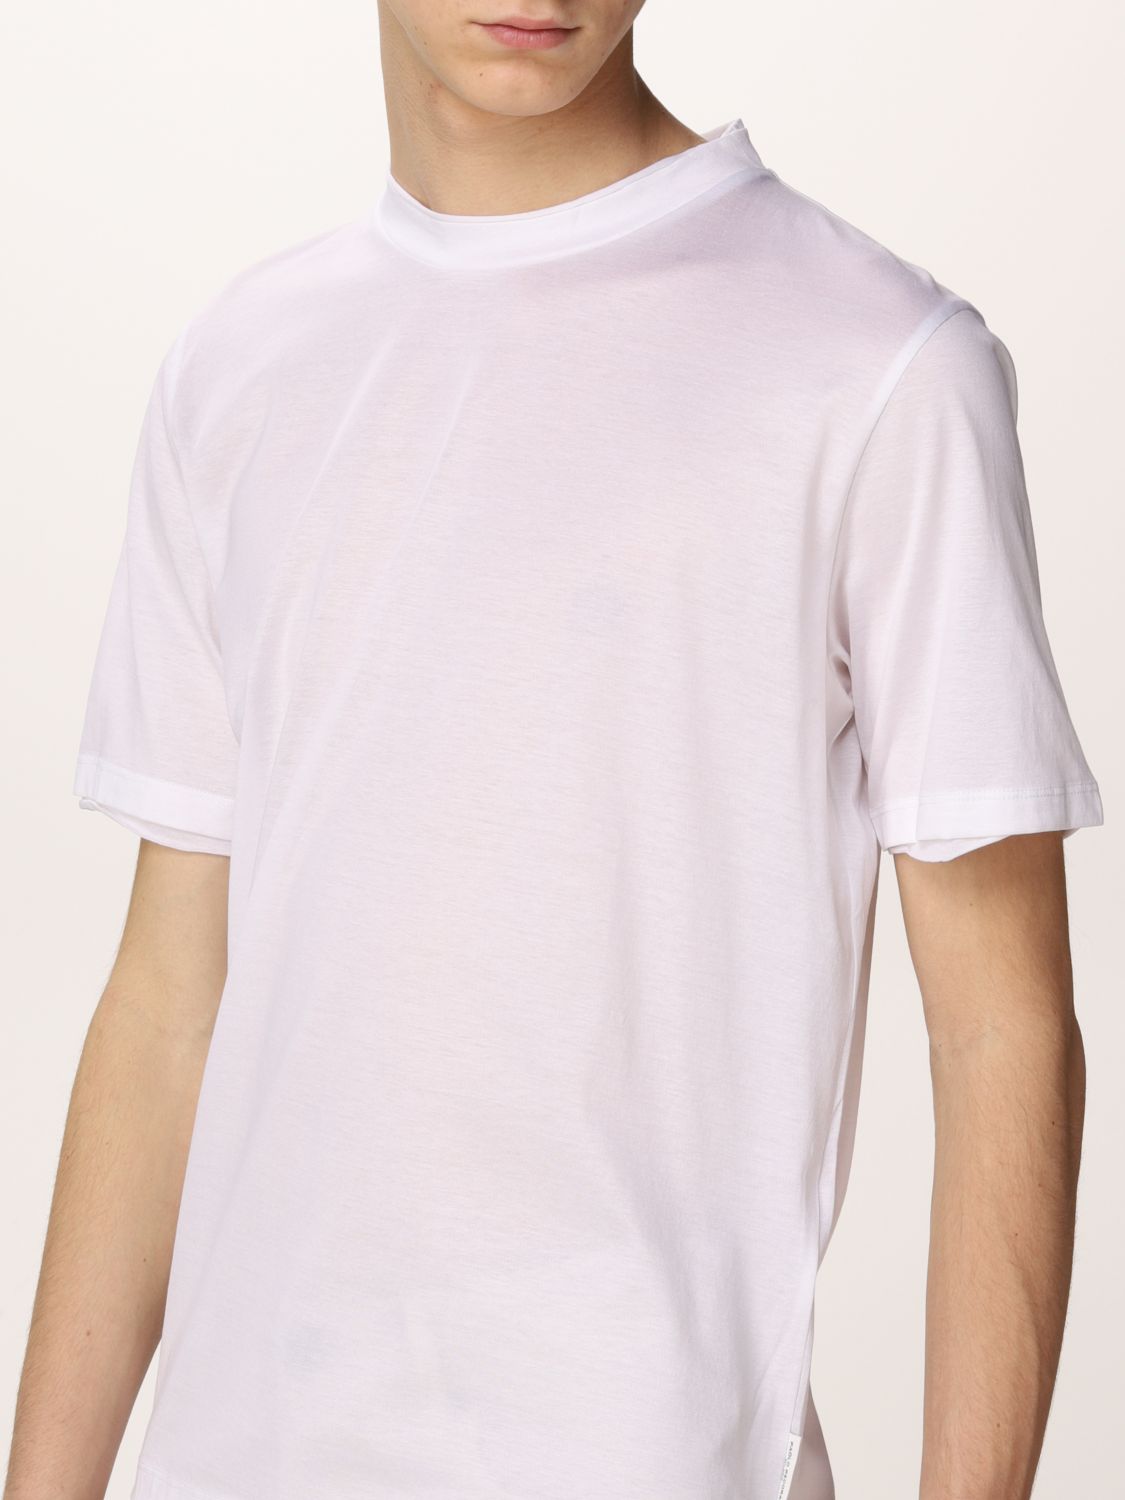 Tシャツ Paolo Pecora: Tシャツ Paolo Pecora メンズ ホワイト 3